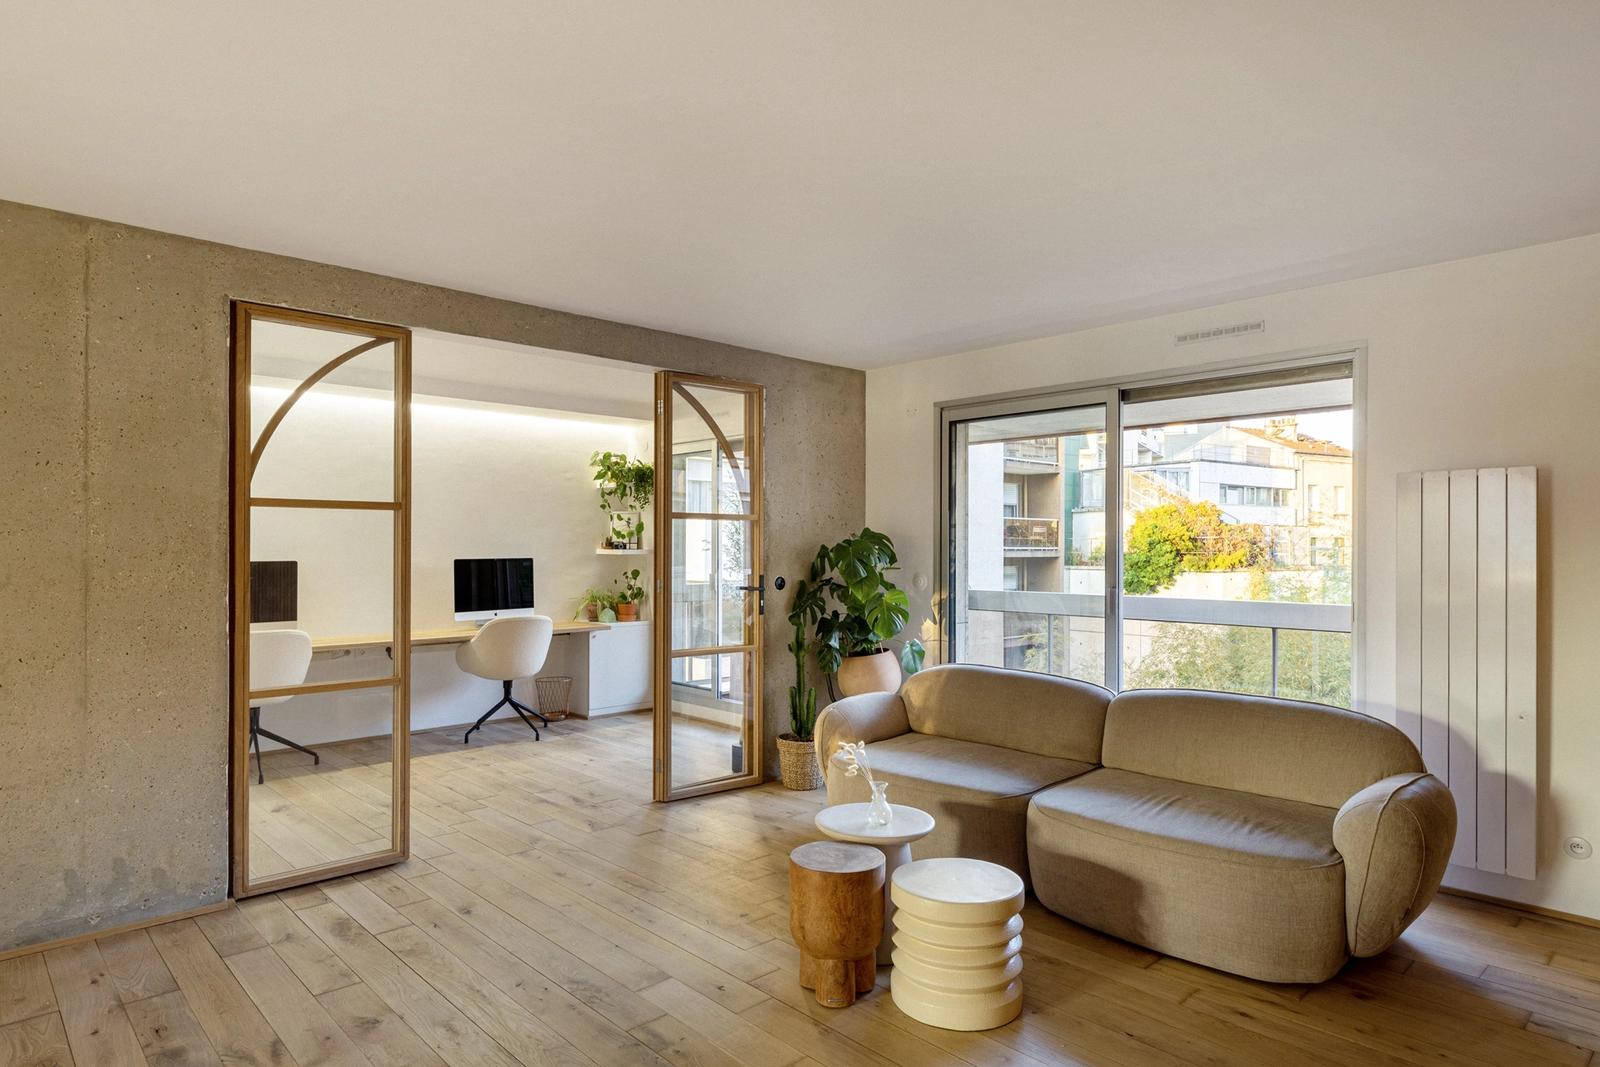 Modern, minimalist apartment